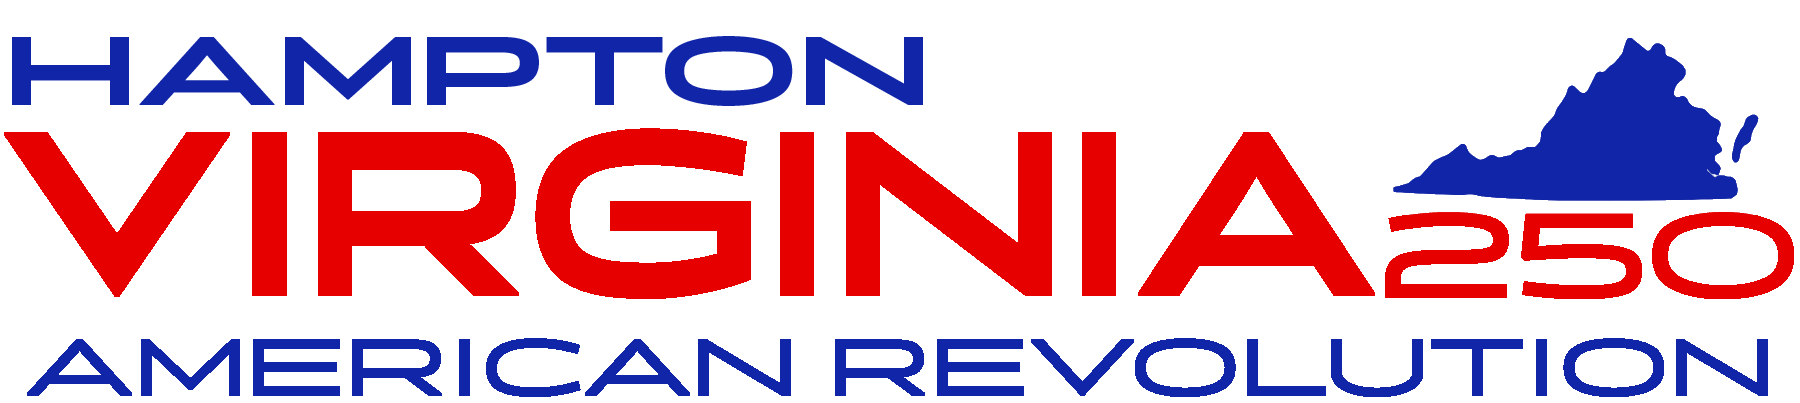 logo for Hampton Virginia 250 American Revolution 